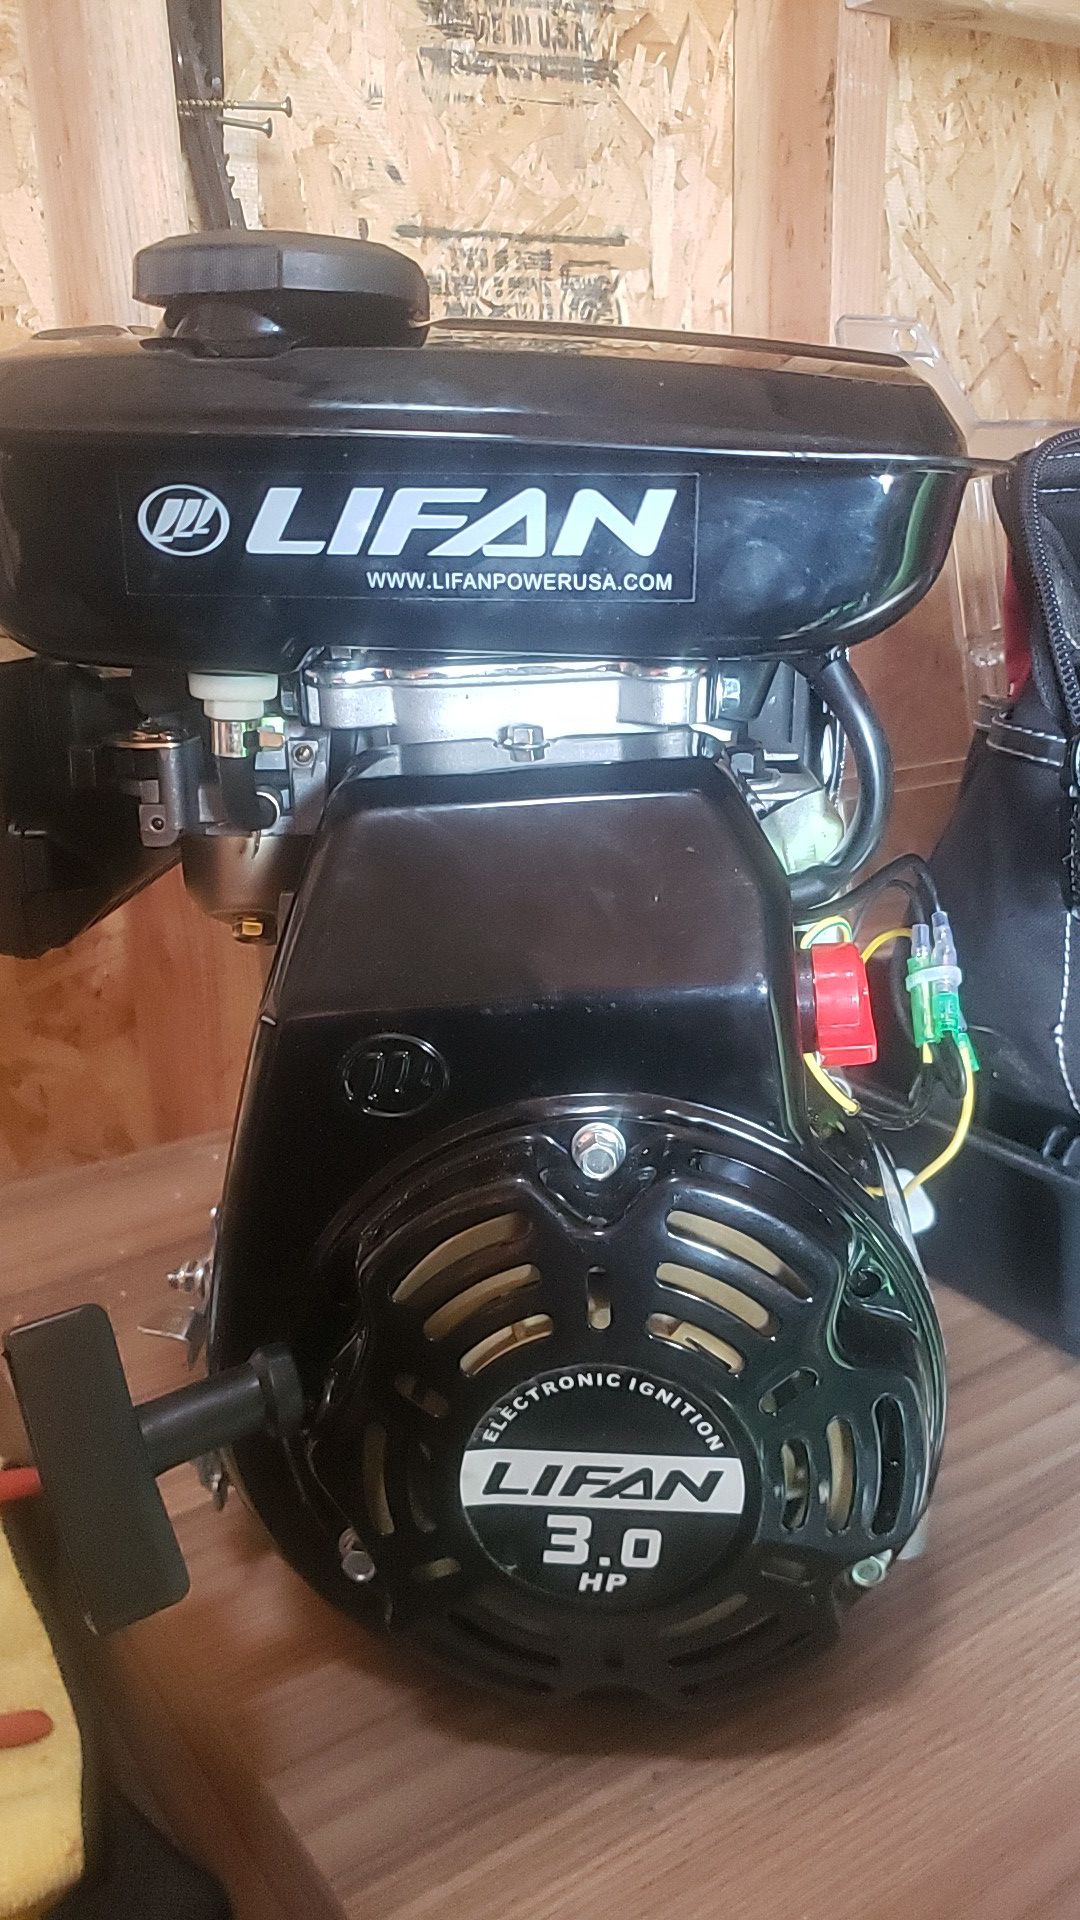 Lifan 3.0 electric motor